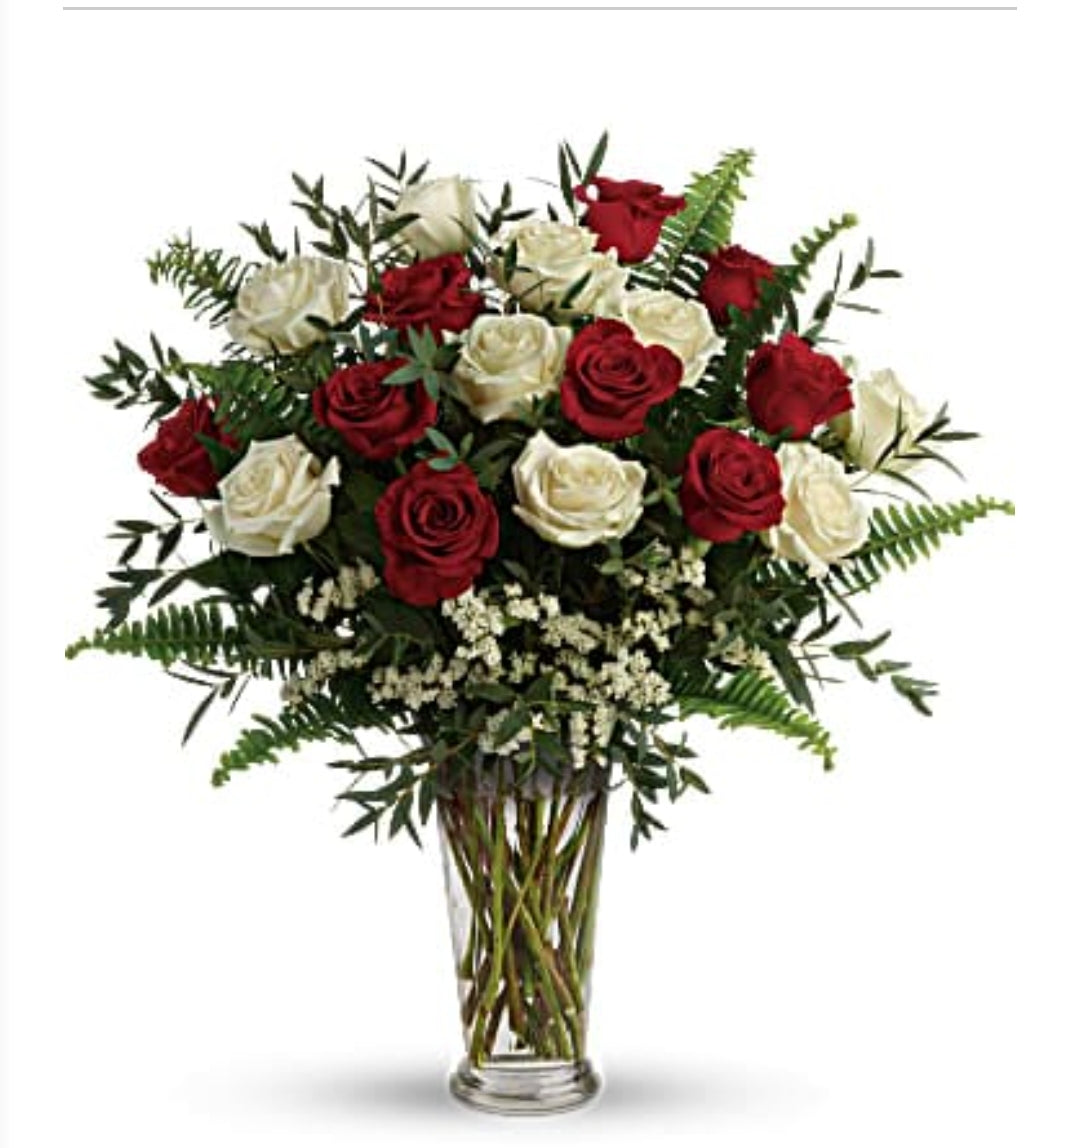 Rose rouge et blanche avec vase